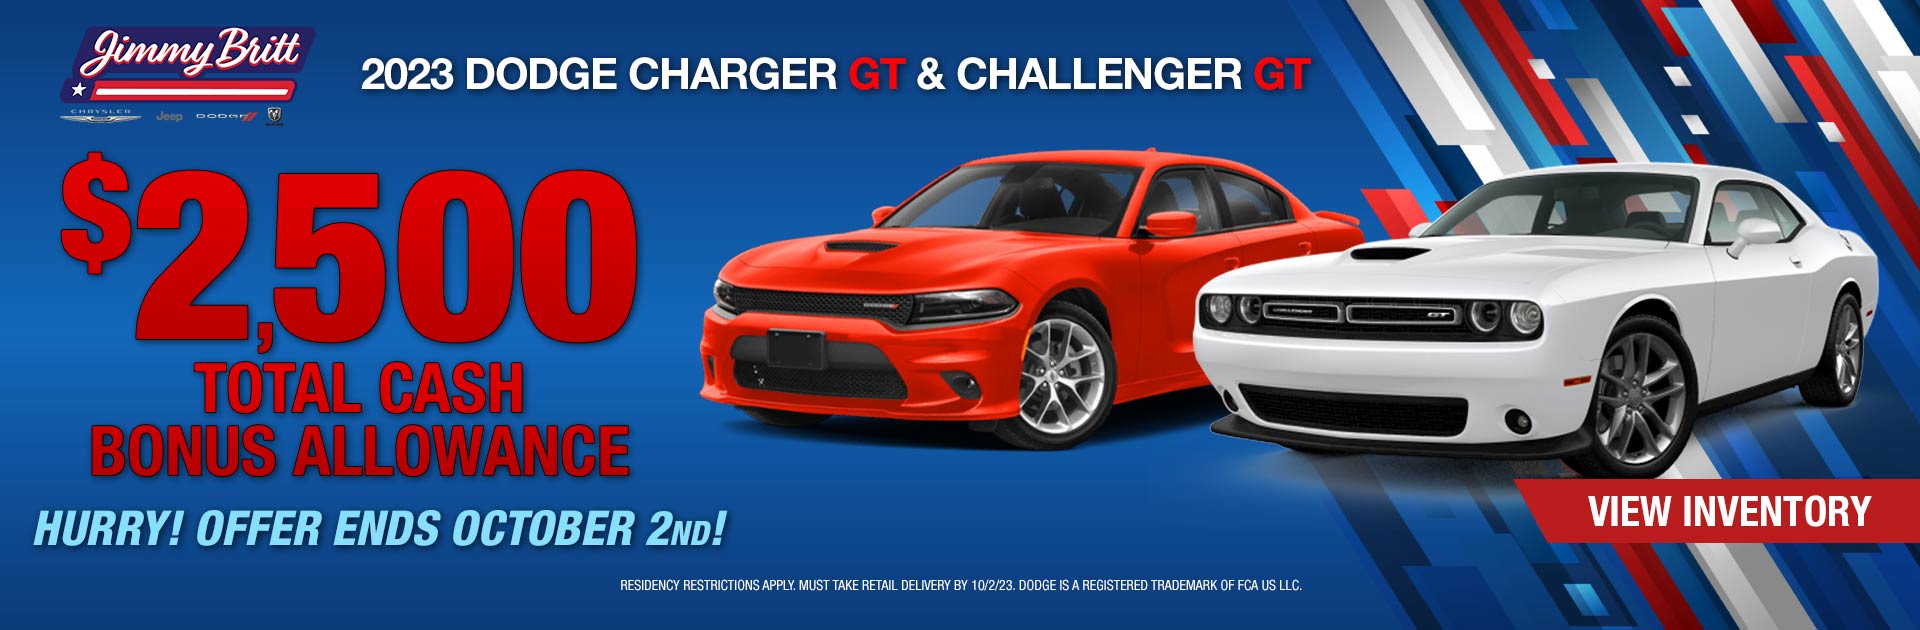 2023 Dodge Charger GT & Challenger GT: Up to $2,500 in total cash Bonus allowance!